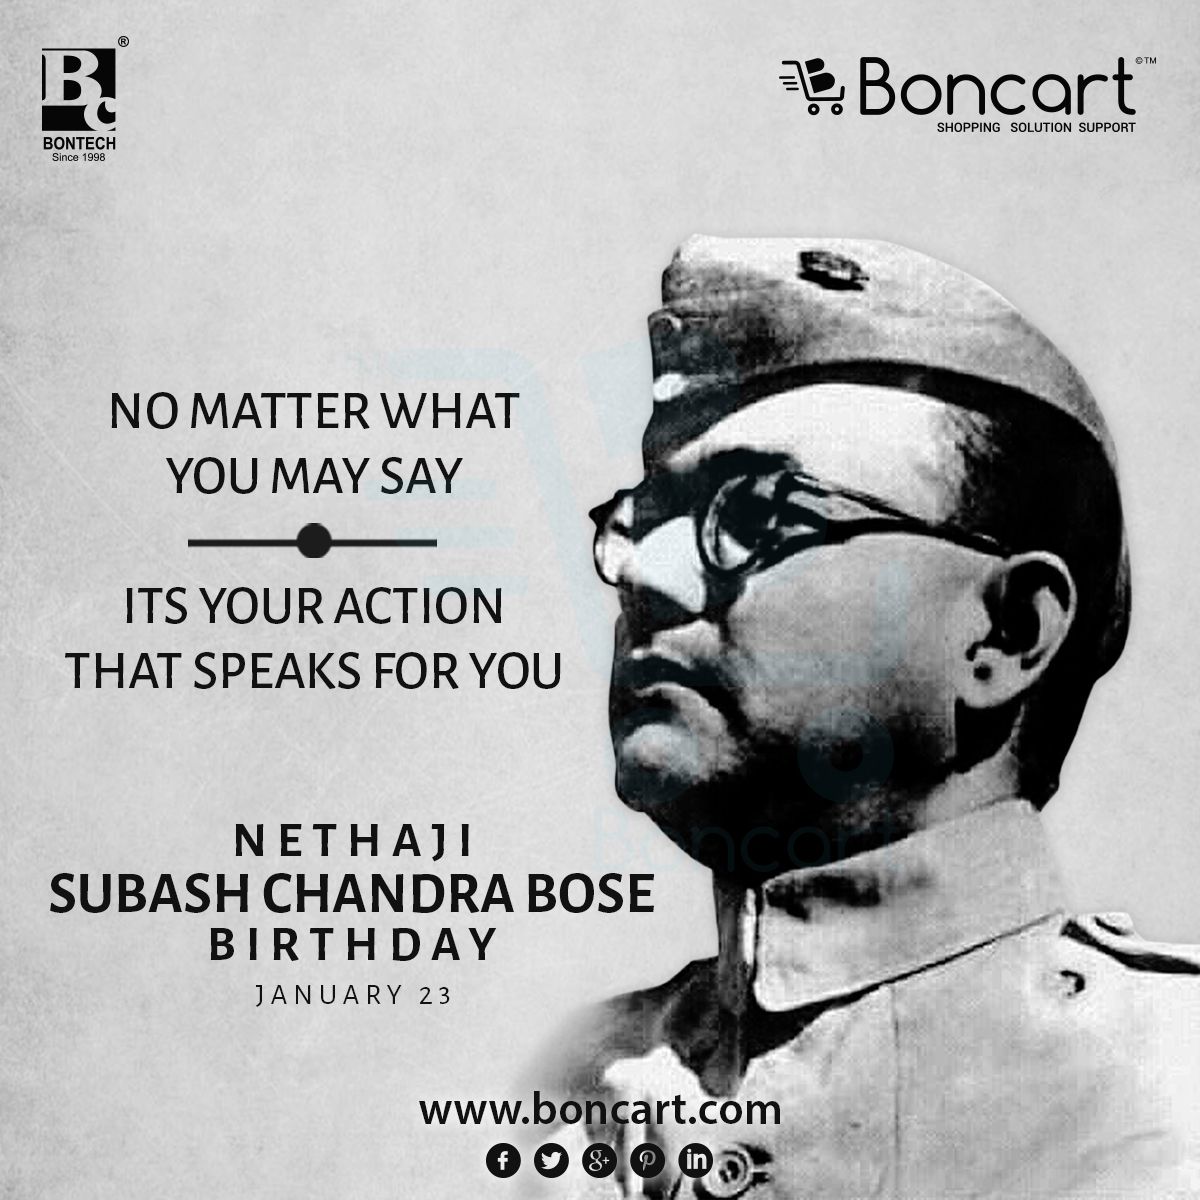 Nethaji Subash Chandra Bose Birthday january 23. Subhas chandra